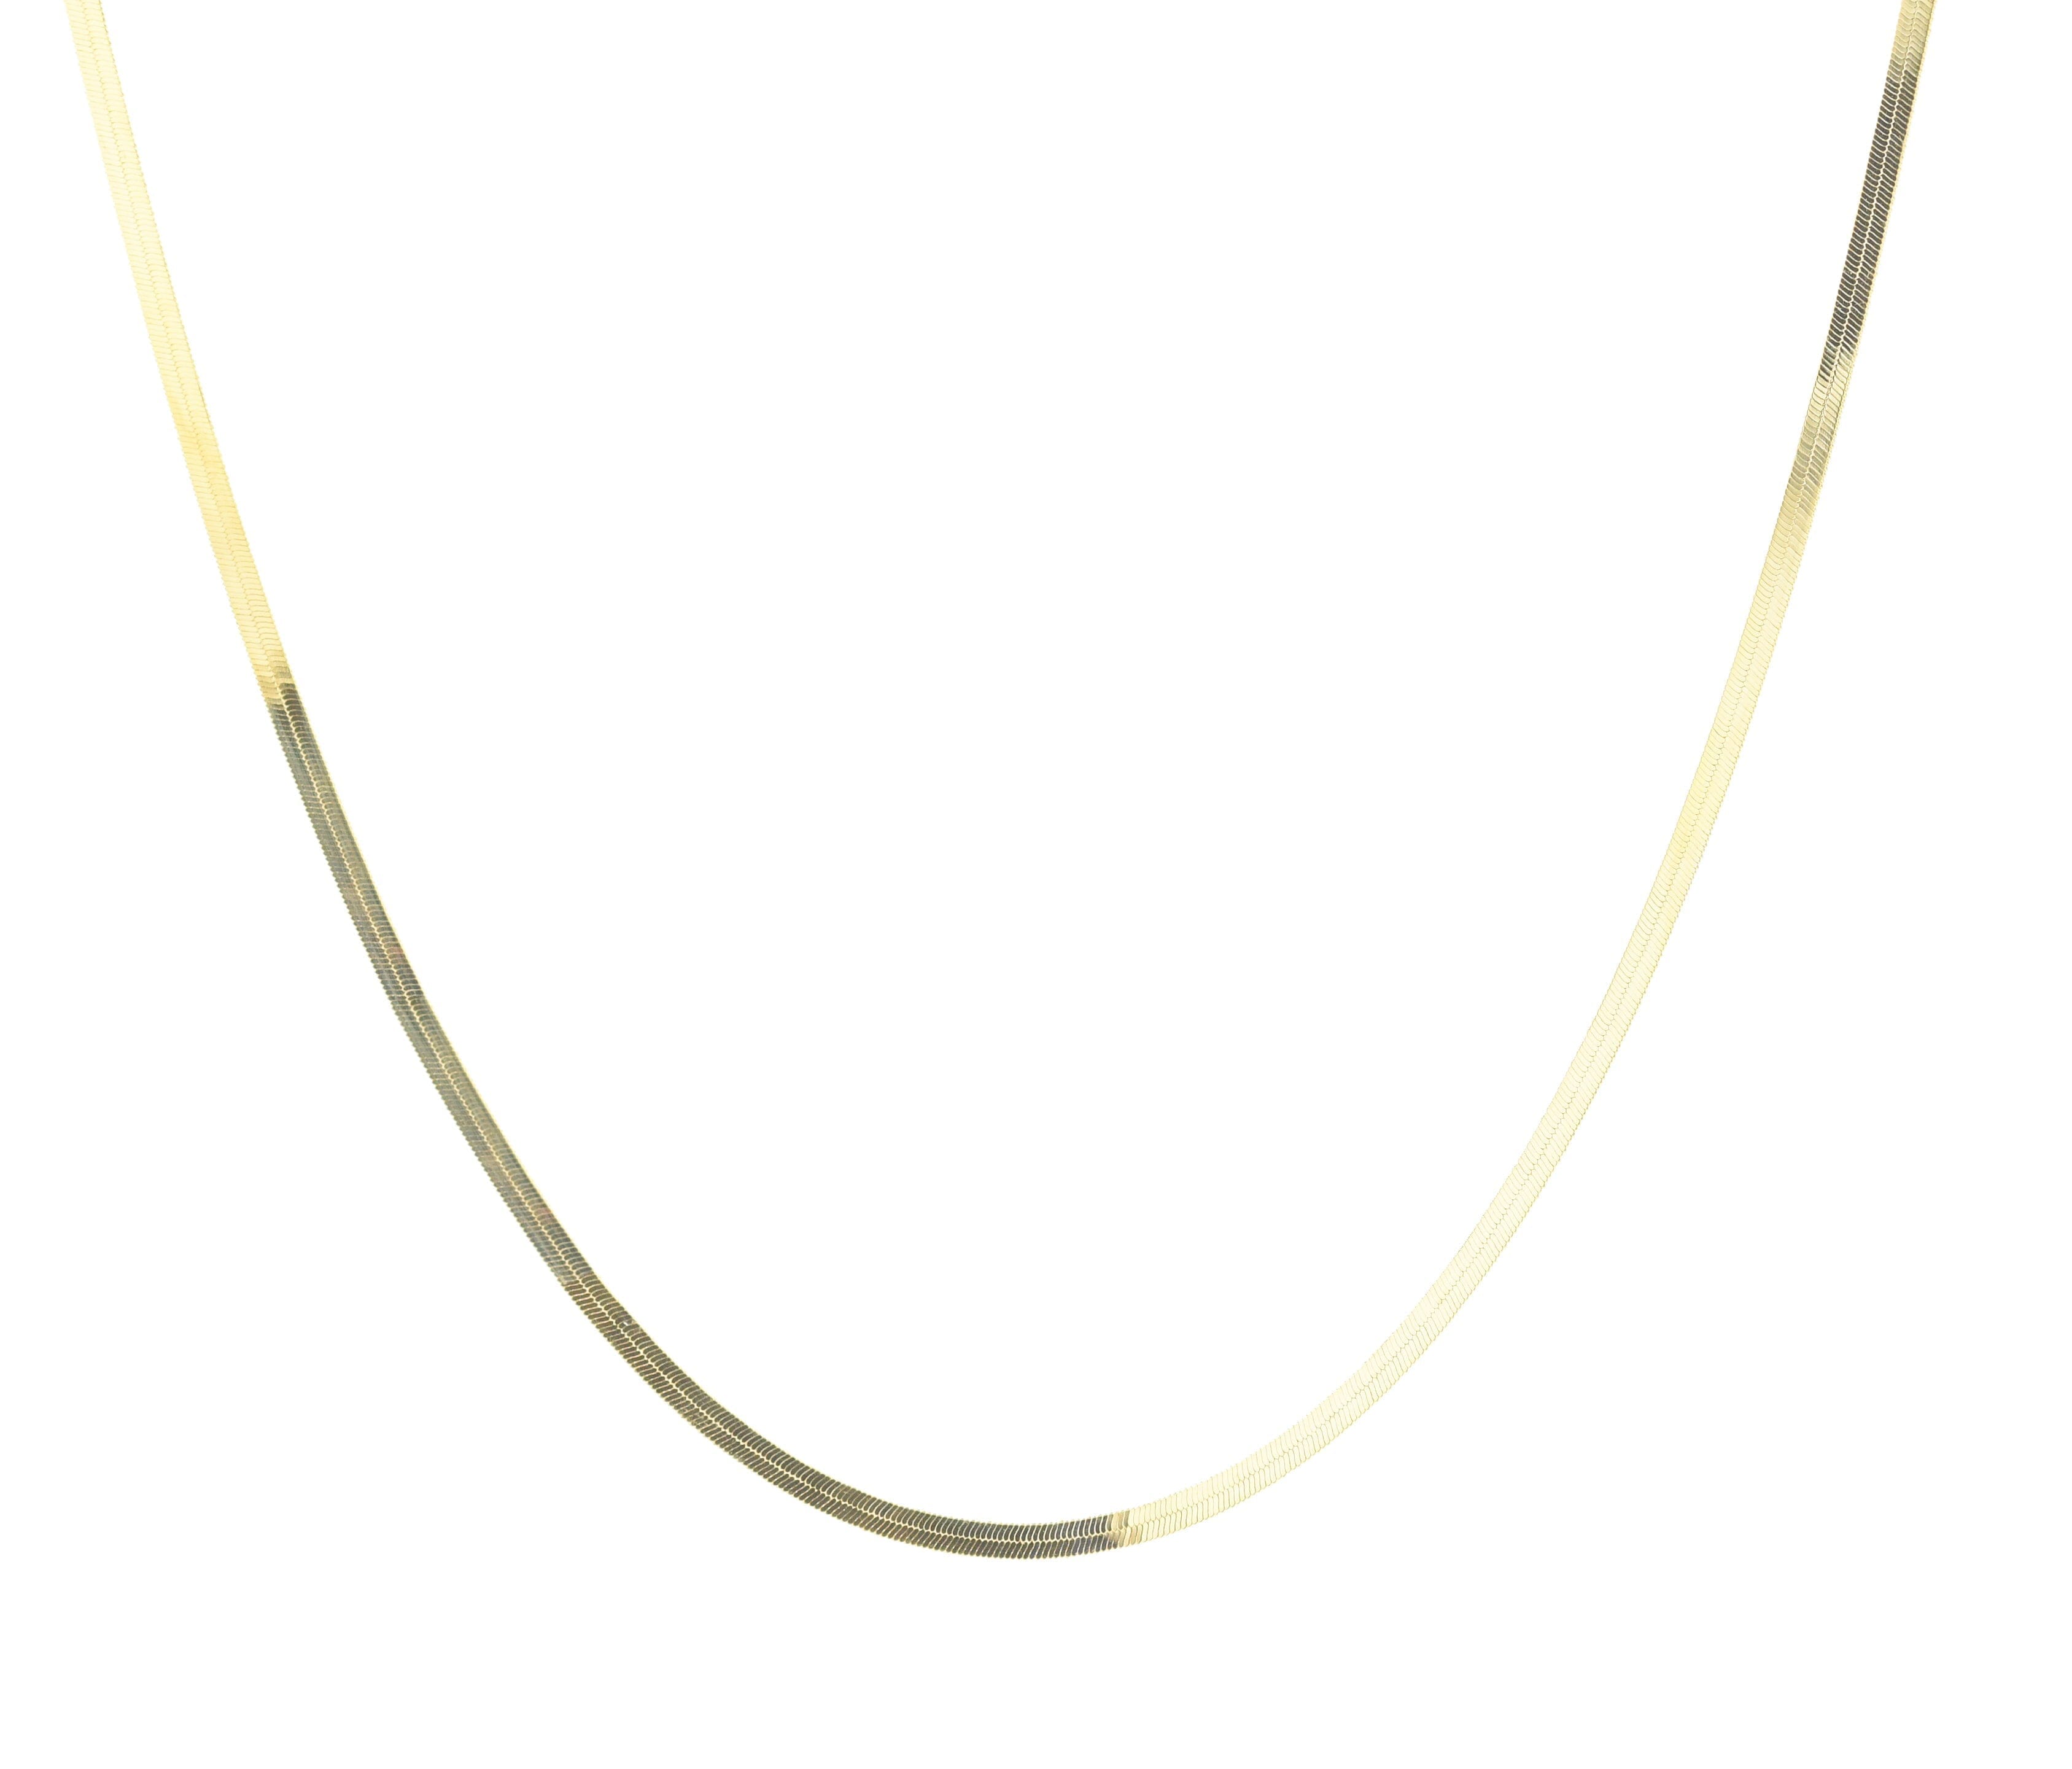 Armor Necklace Necklaces - BONDEYE JEWELRY ®